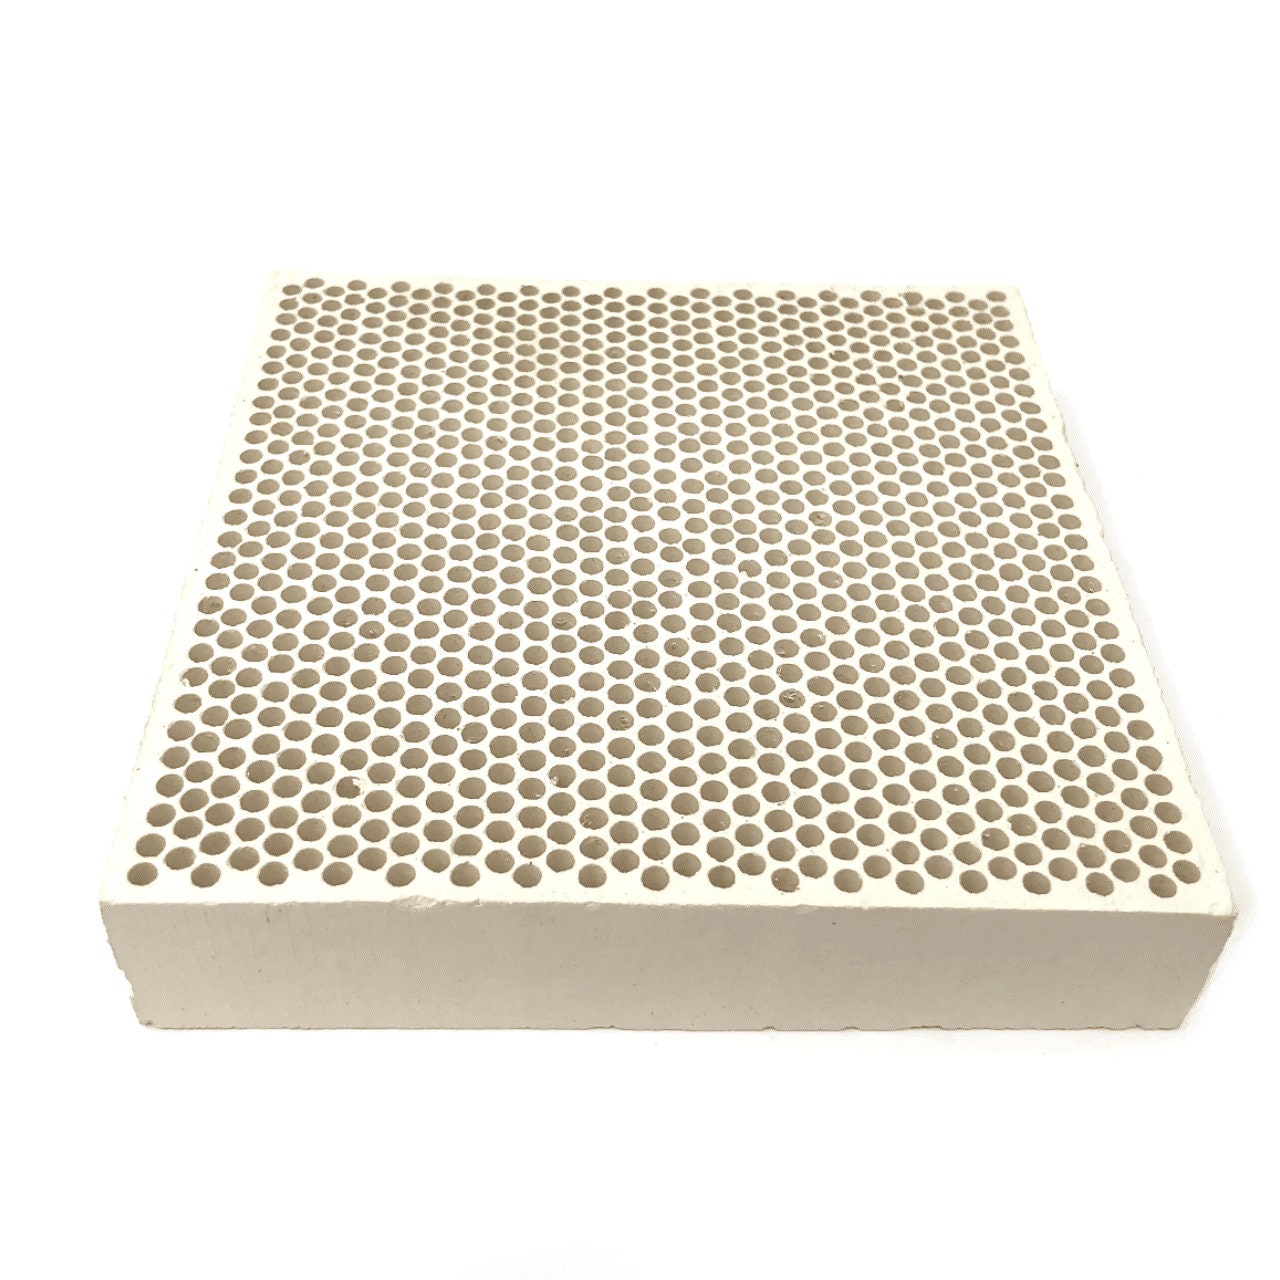 Honeycomb Blocks - Large Rectangle 5-1/2 x 7-3/4